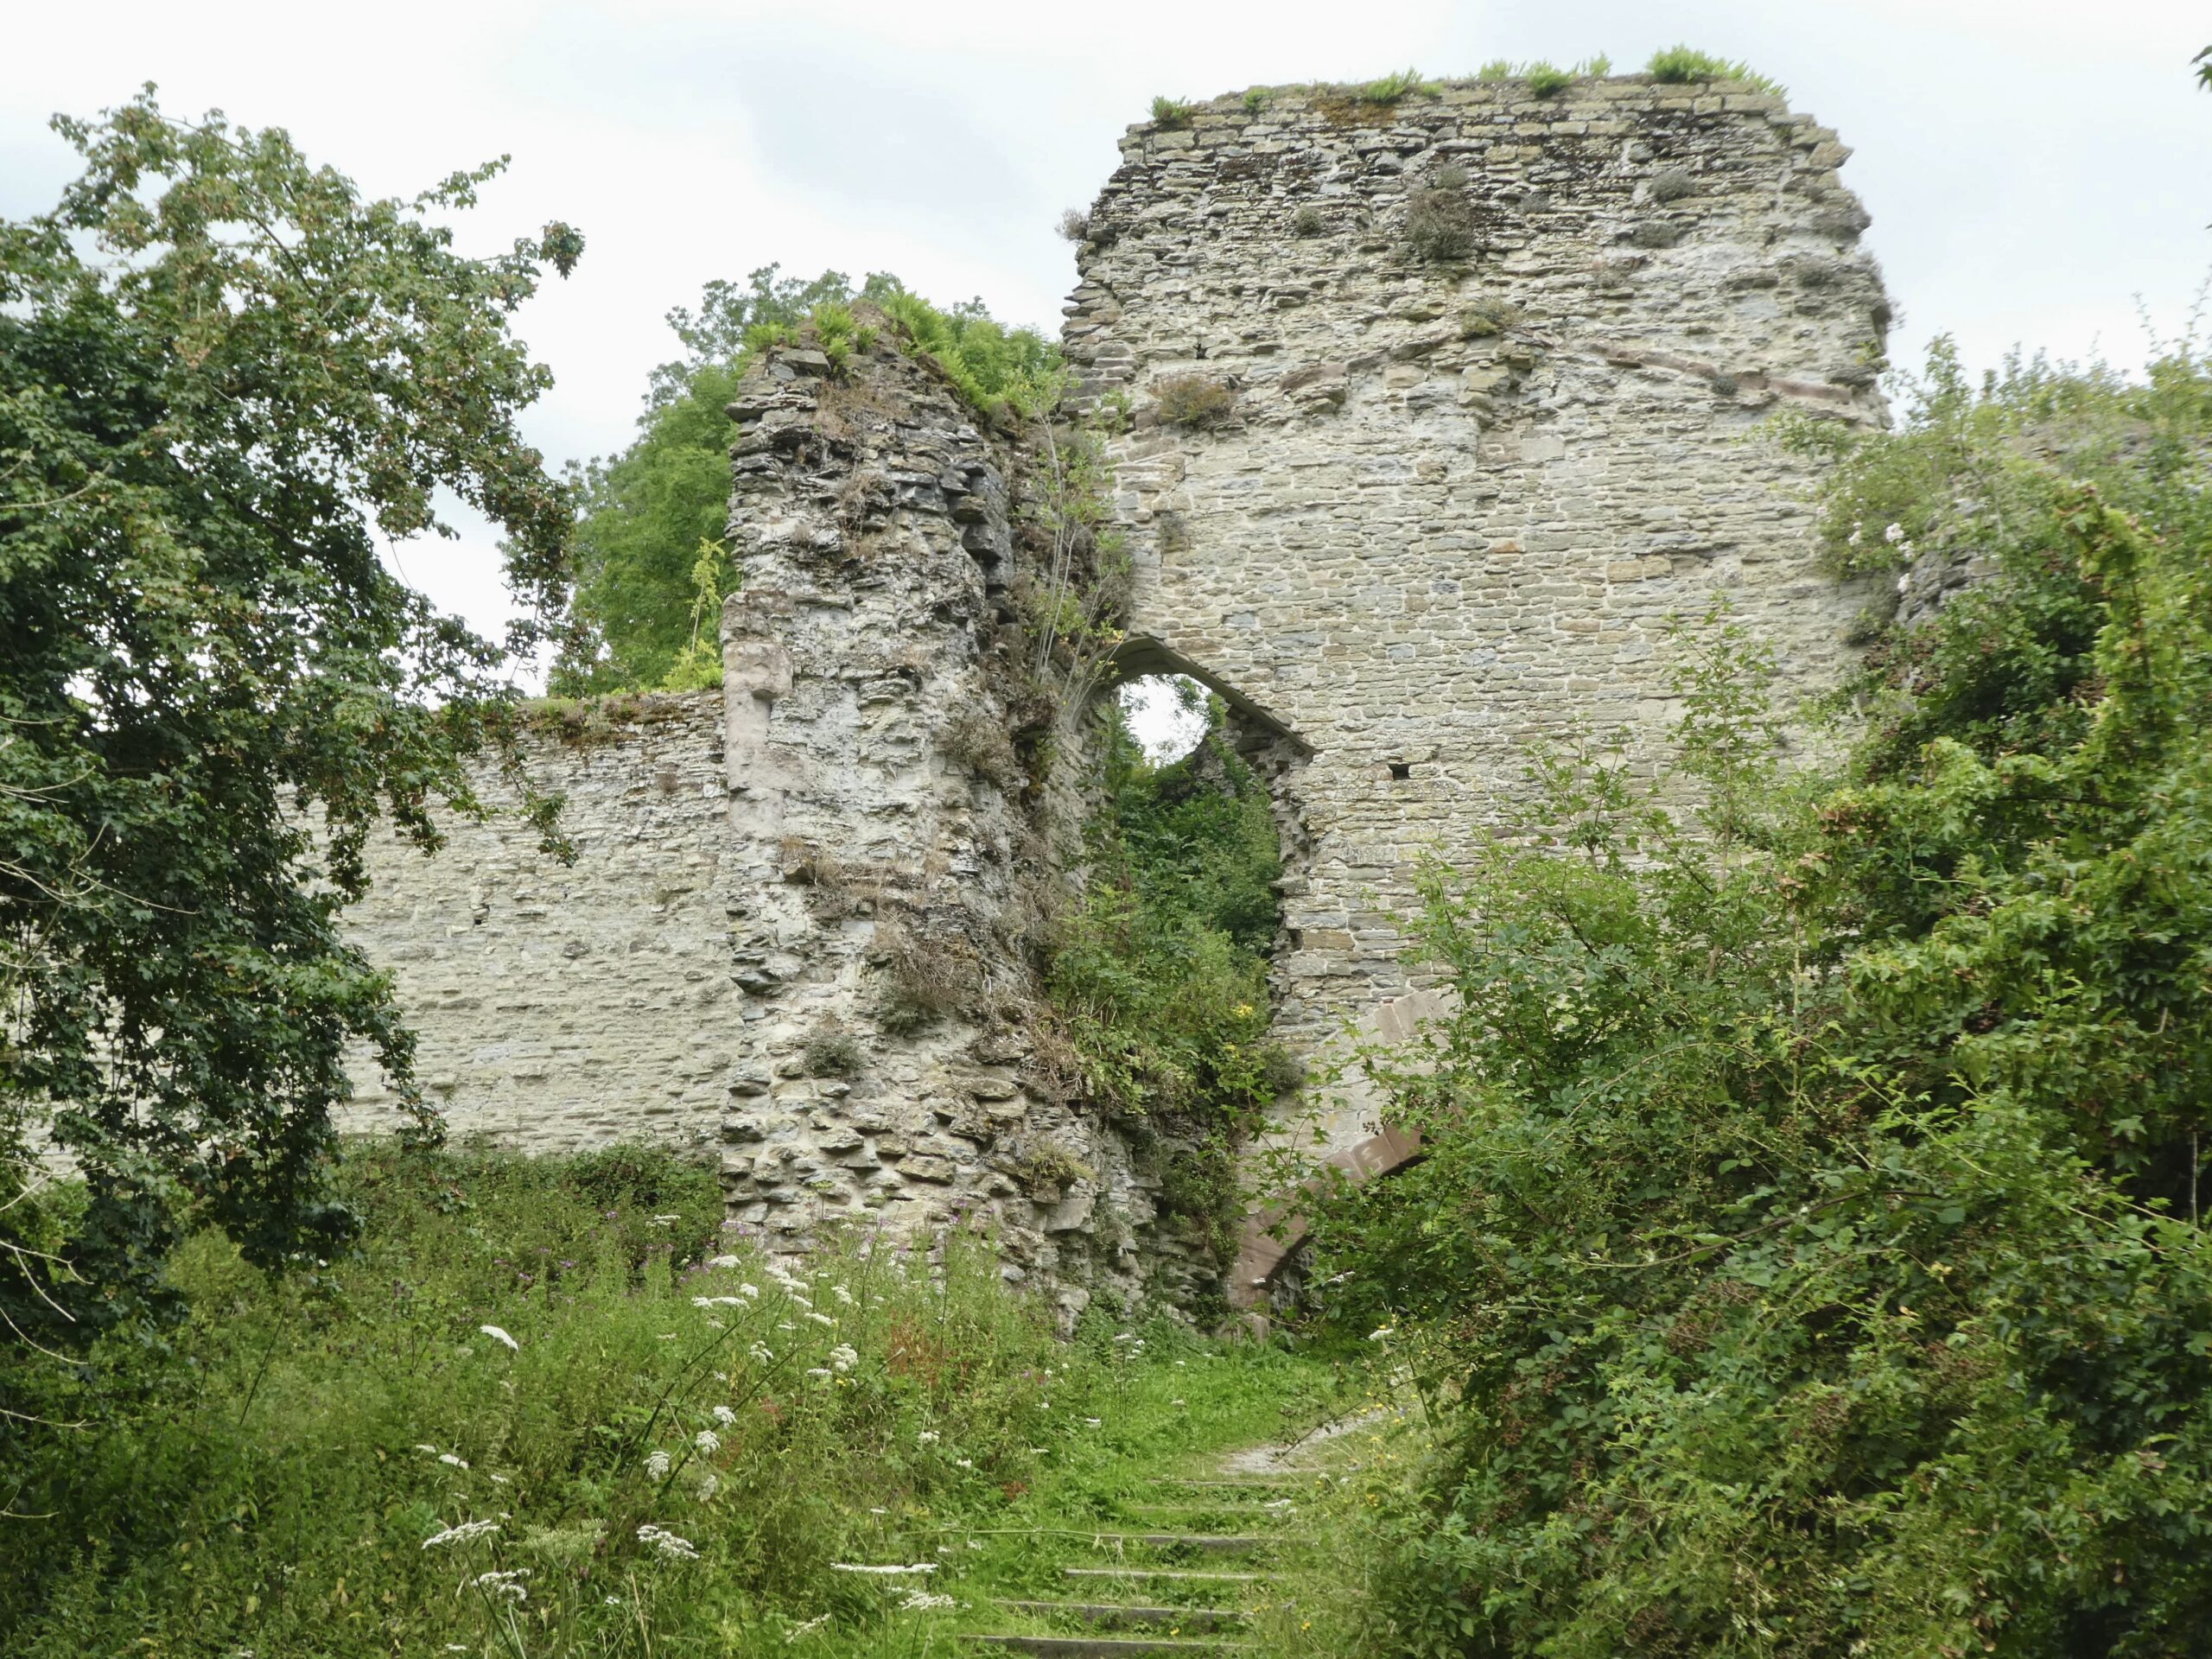 View of Wigmore Castle gatehouse